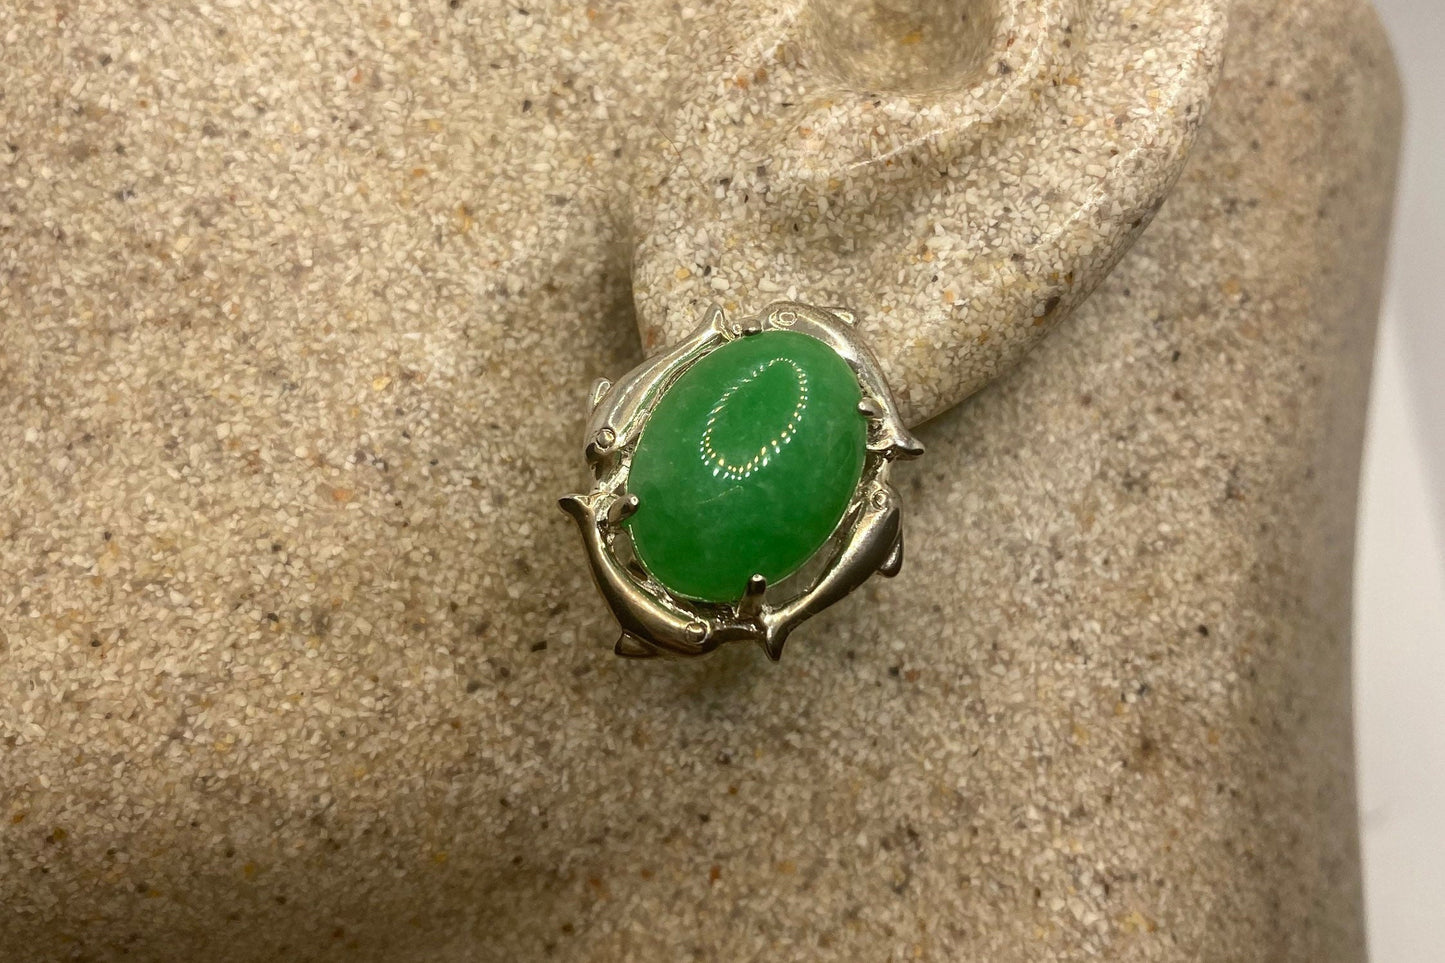 Vintage Fun Green Jade Dolphin 925 Sterling Silver Button Earrings